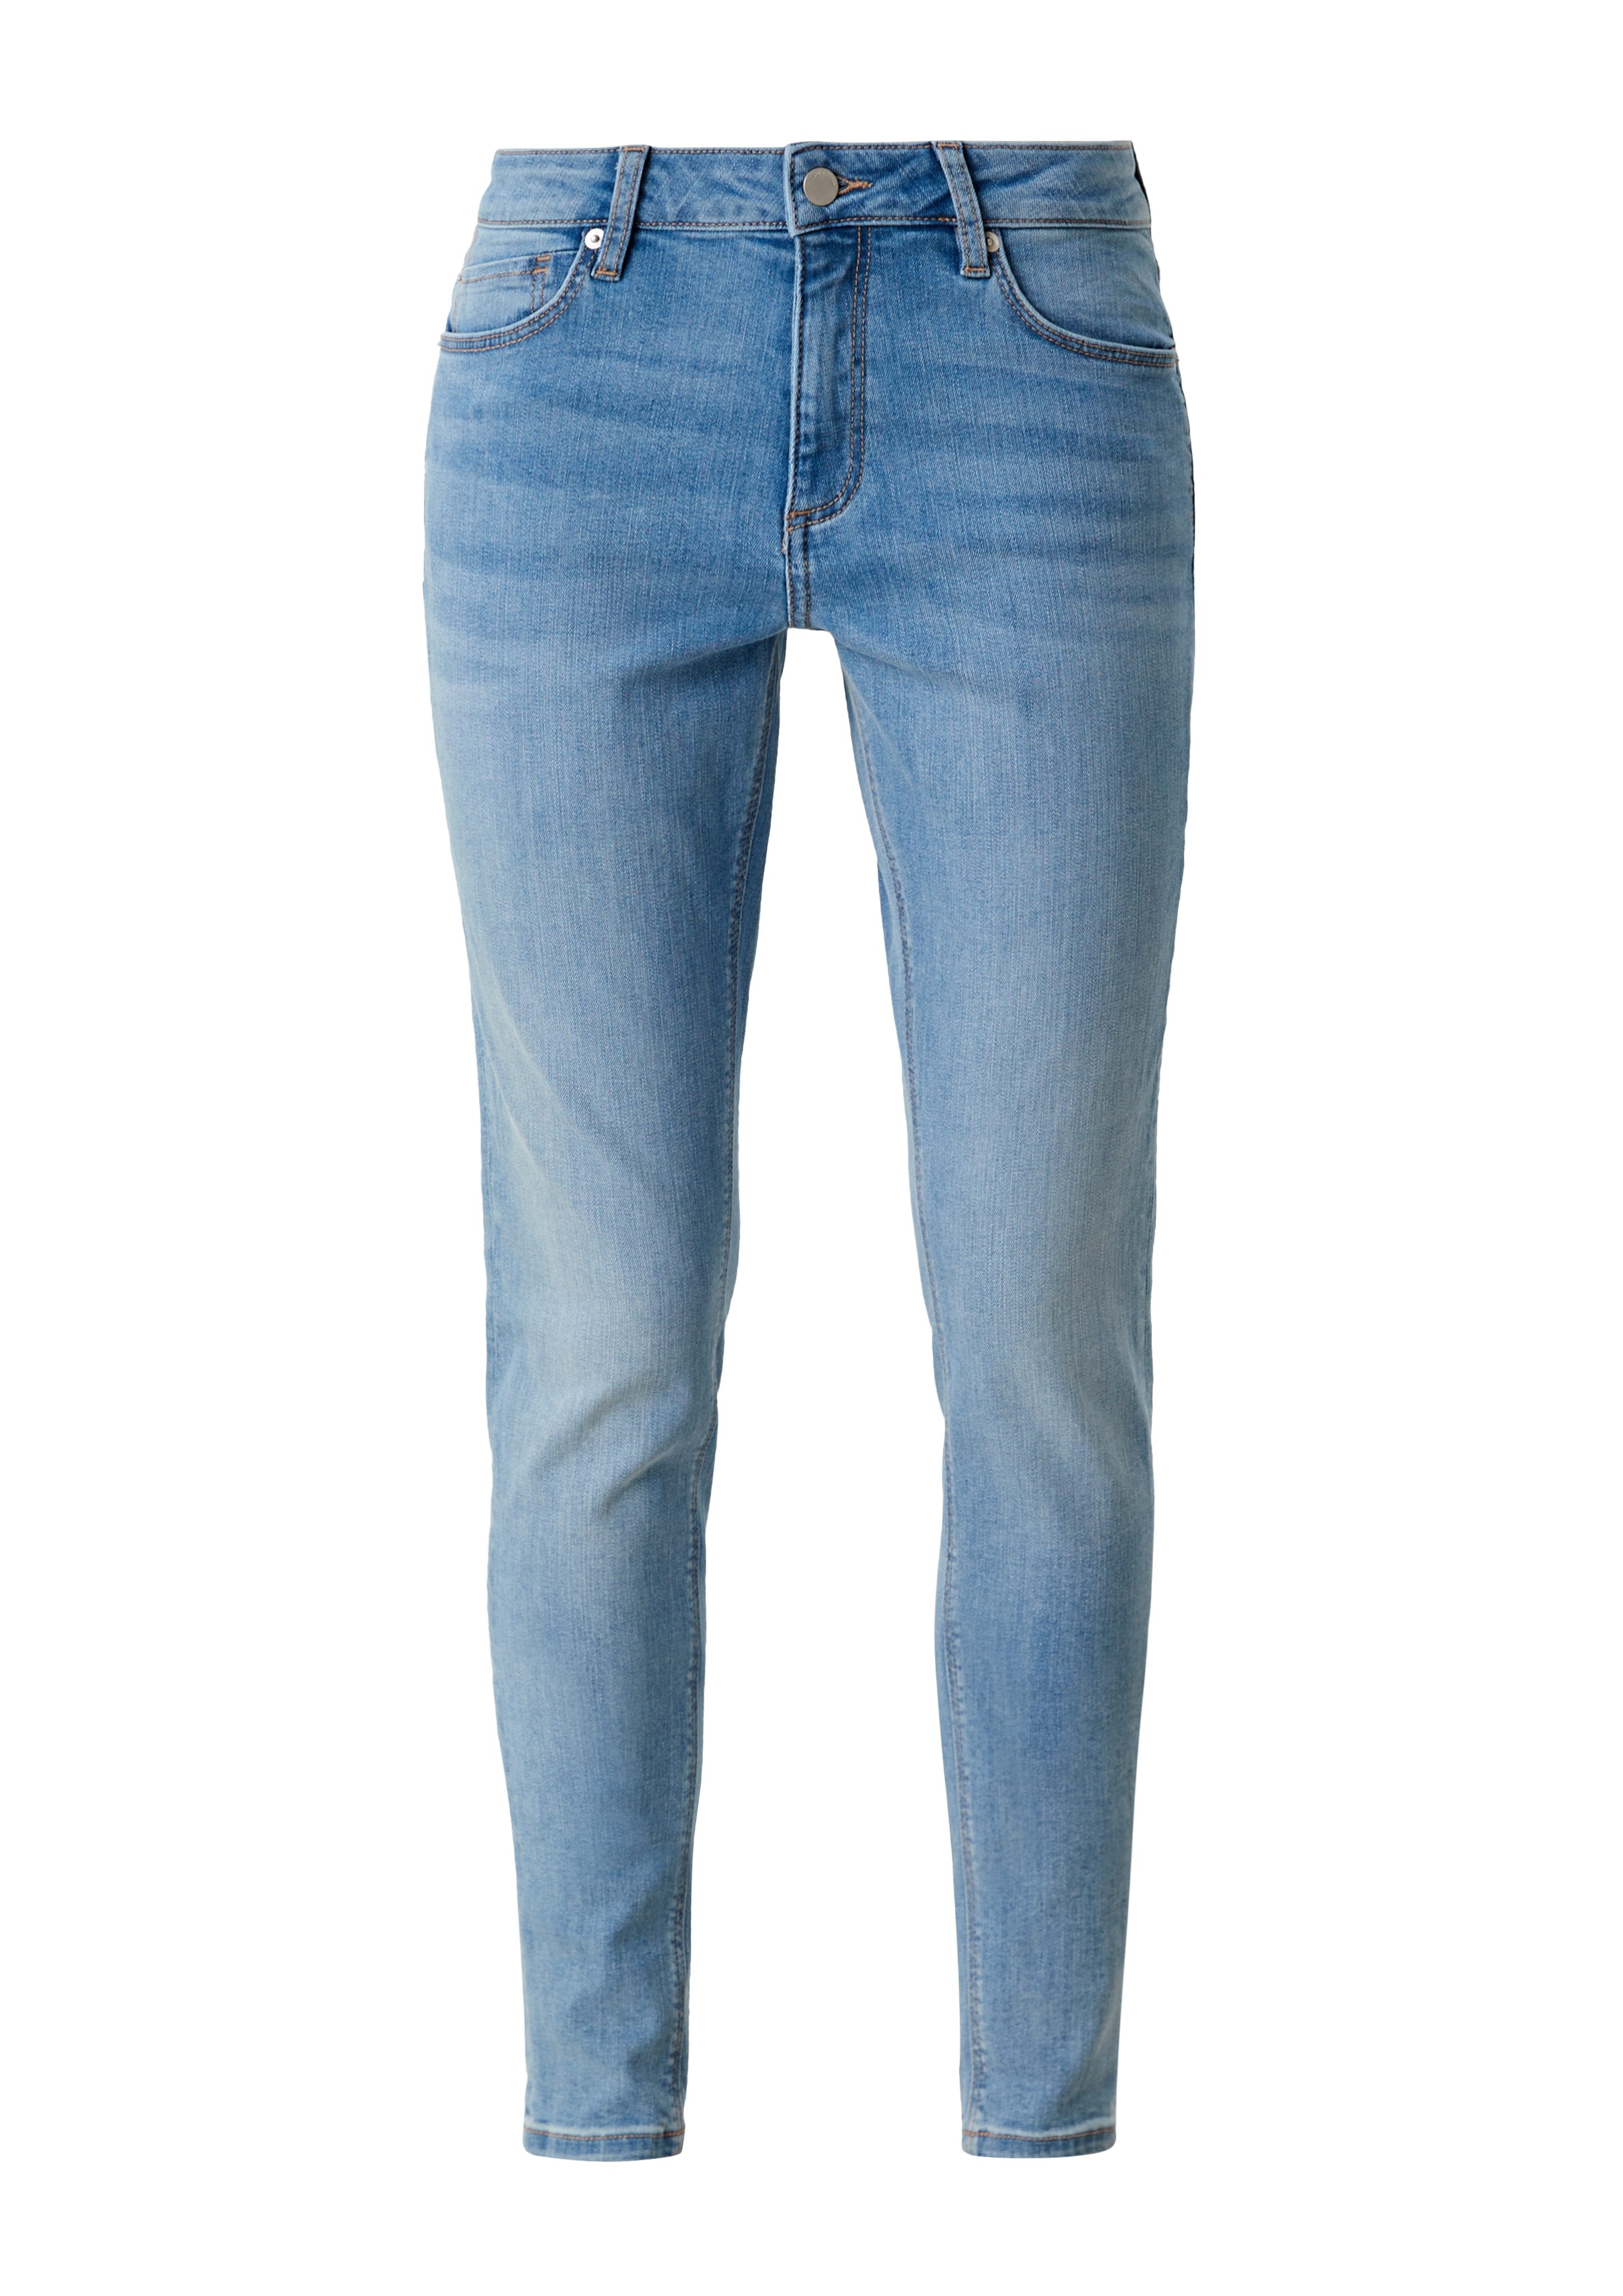 Mid Rise himmelblau Skinny / Waschung Fit Jeans QS Leg / Sadie Stoffhose Skinny /